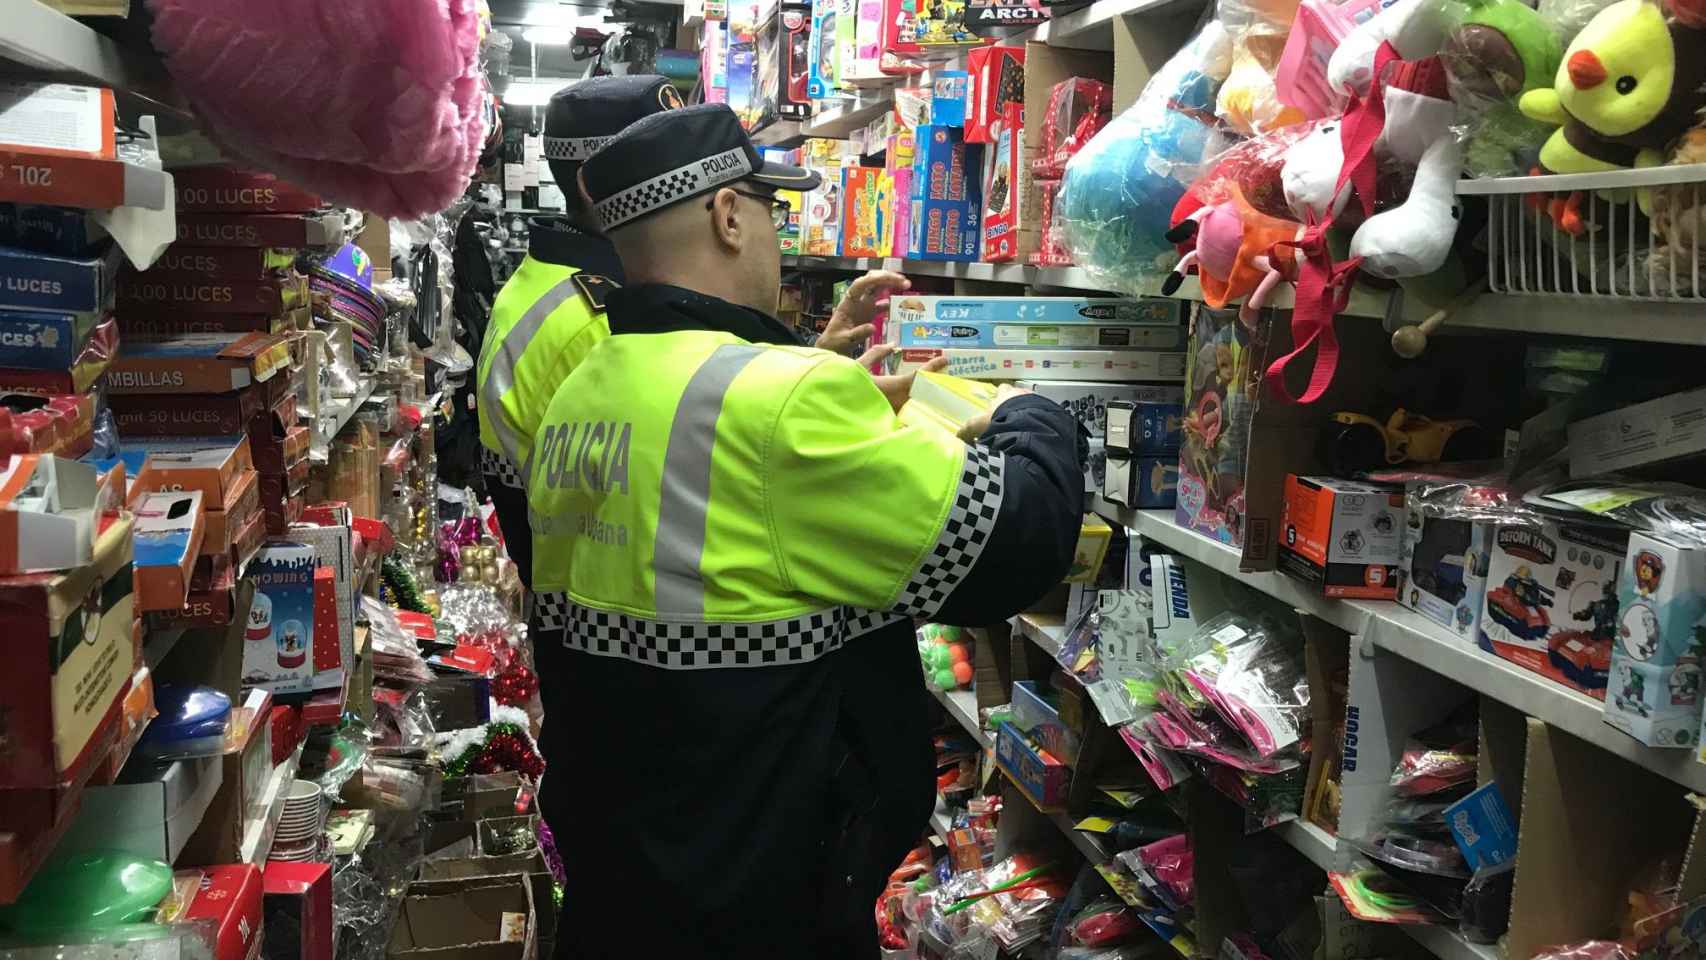 Agentes de la Guàrdia Urbana La Guardia retiran juguetes en mal en Navidad